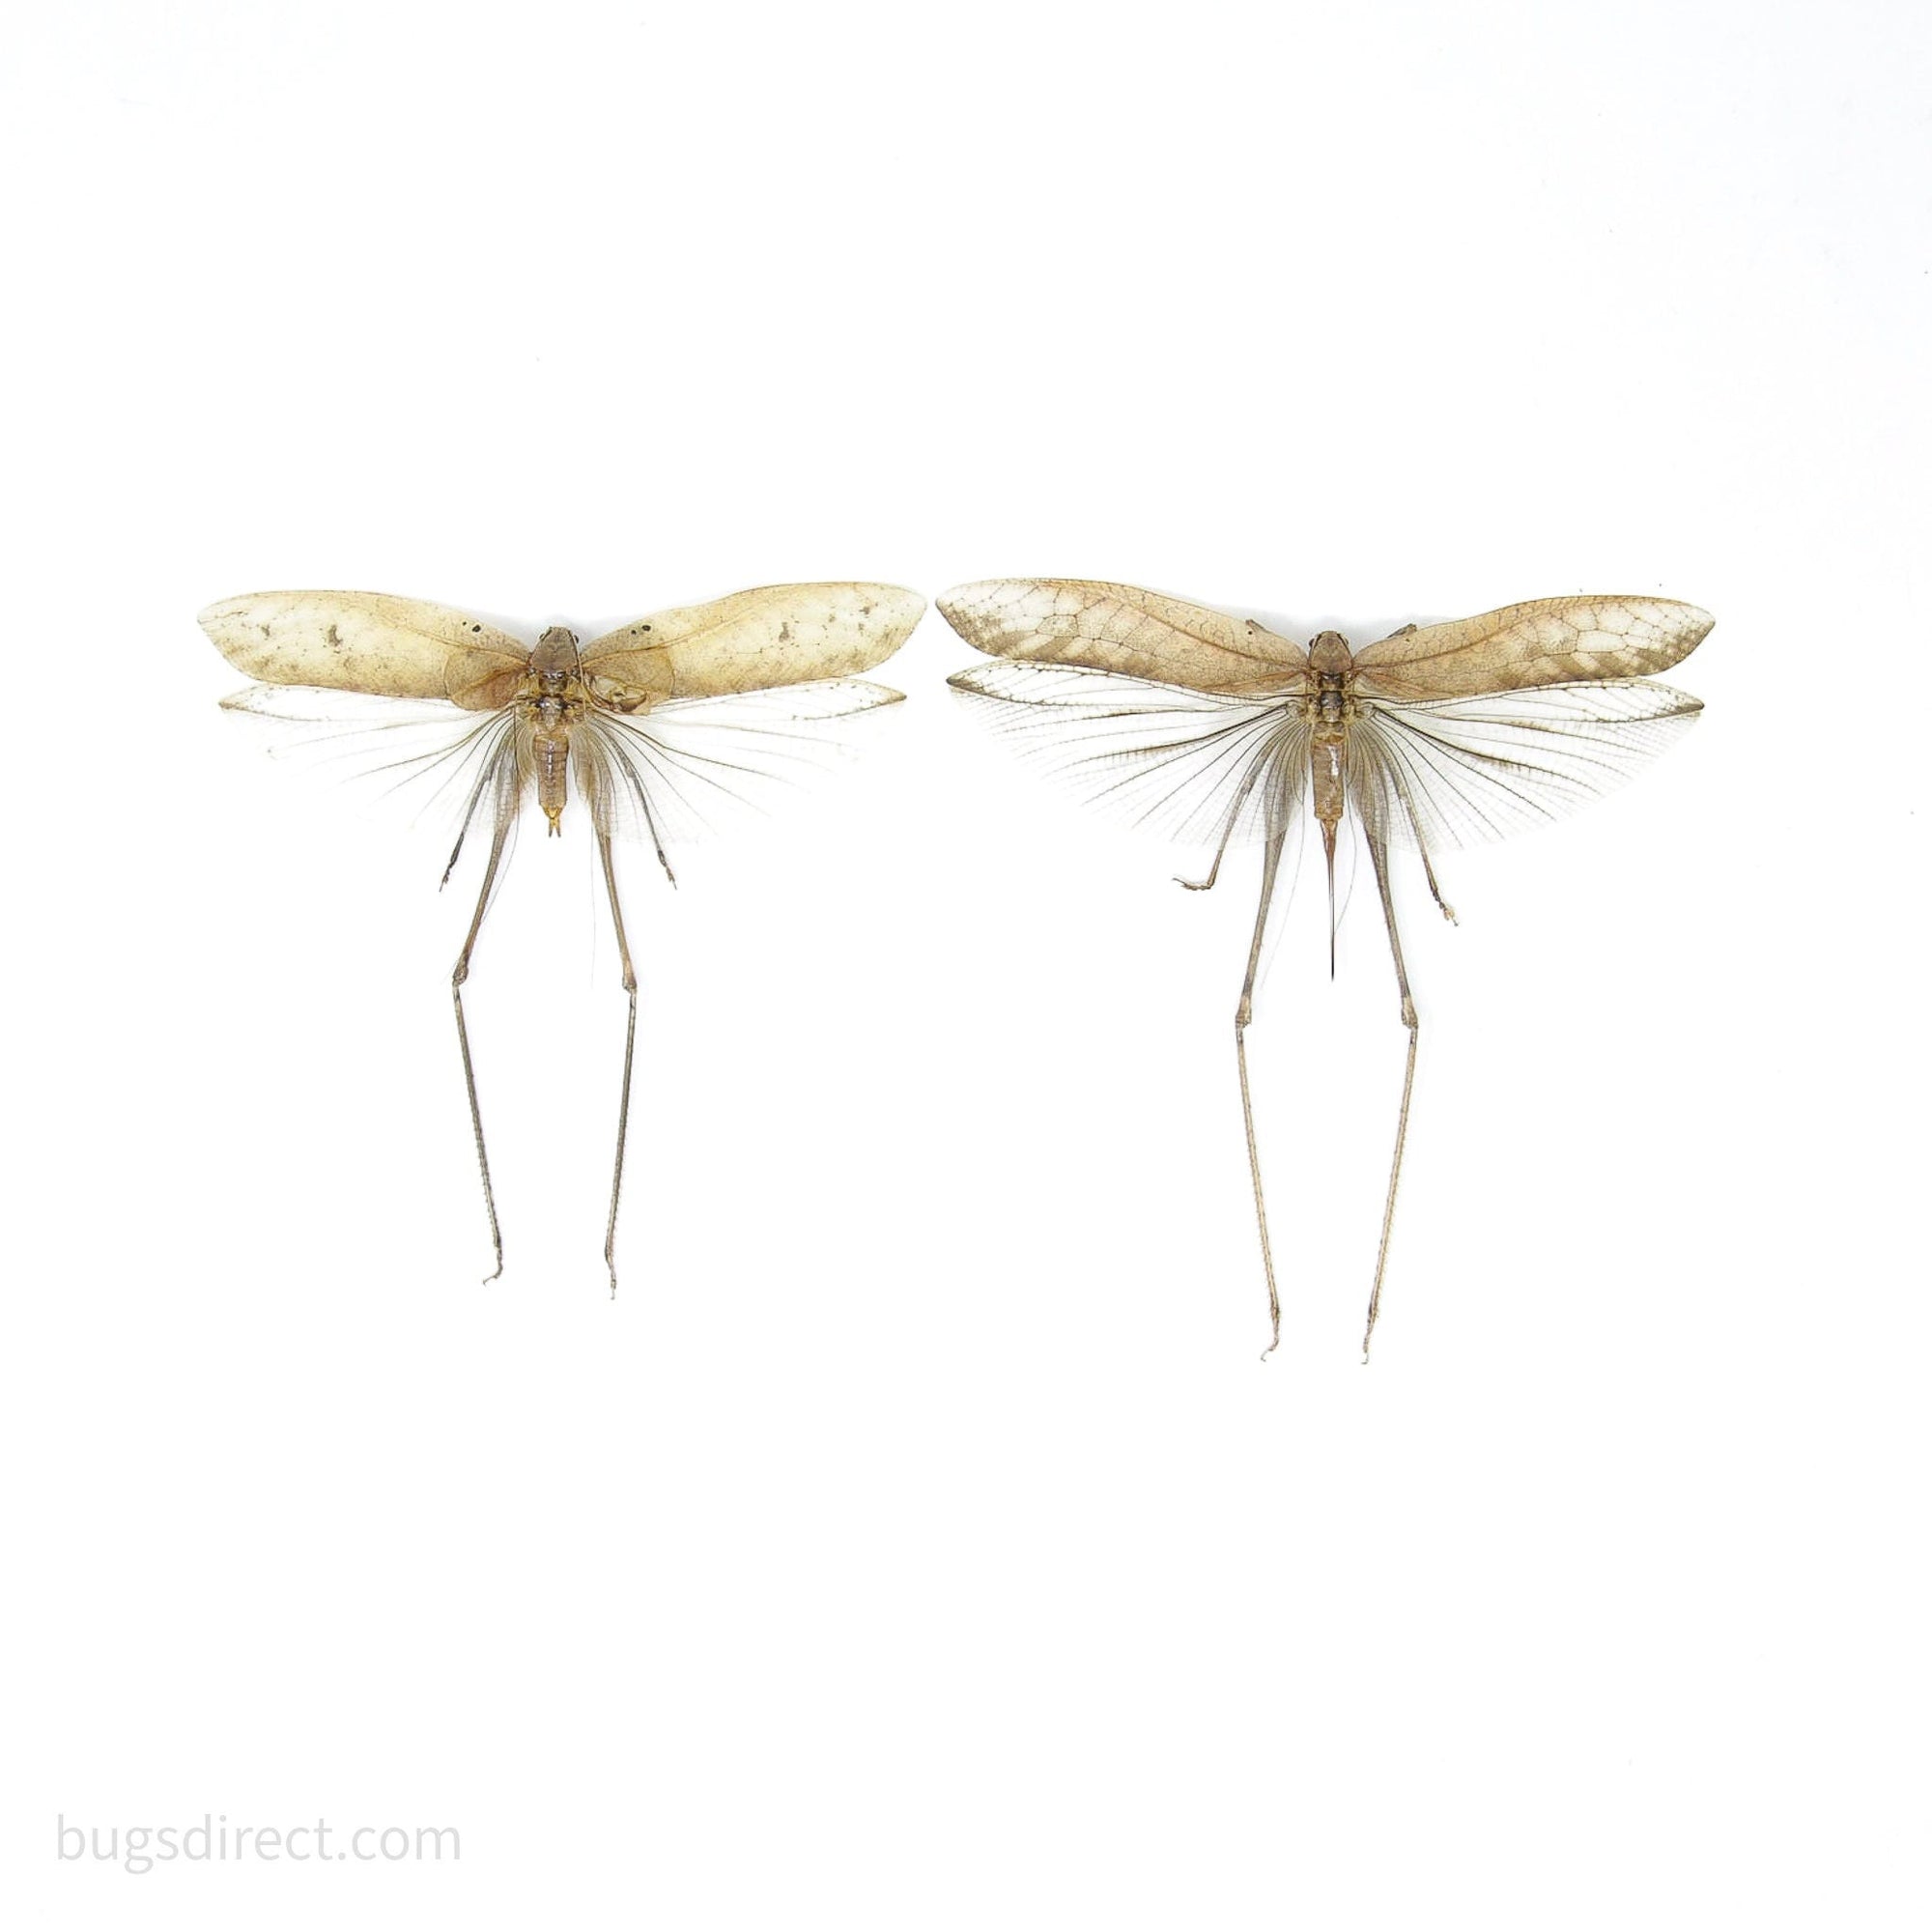 Pair of Thai Bush Katydids 5" Wingspan, Grasshopper, Cricket, Spread Specimens A1 Quality Real Insect Entomology